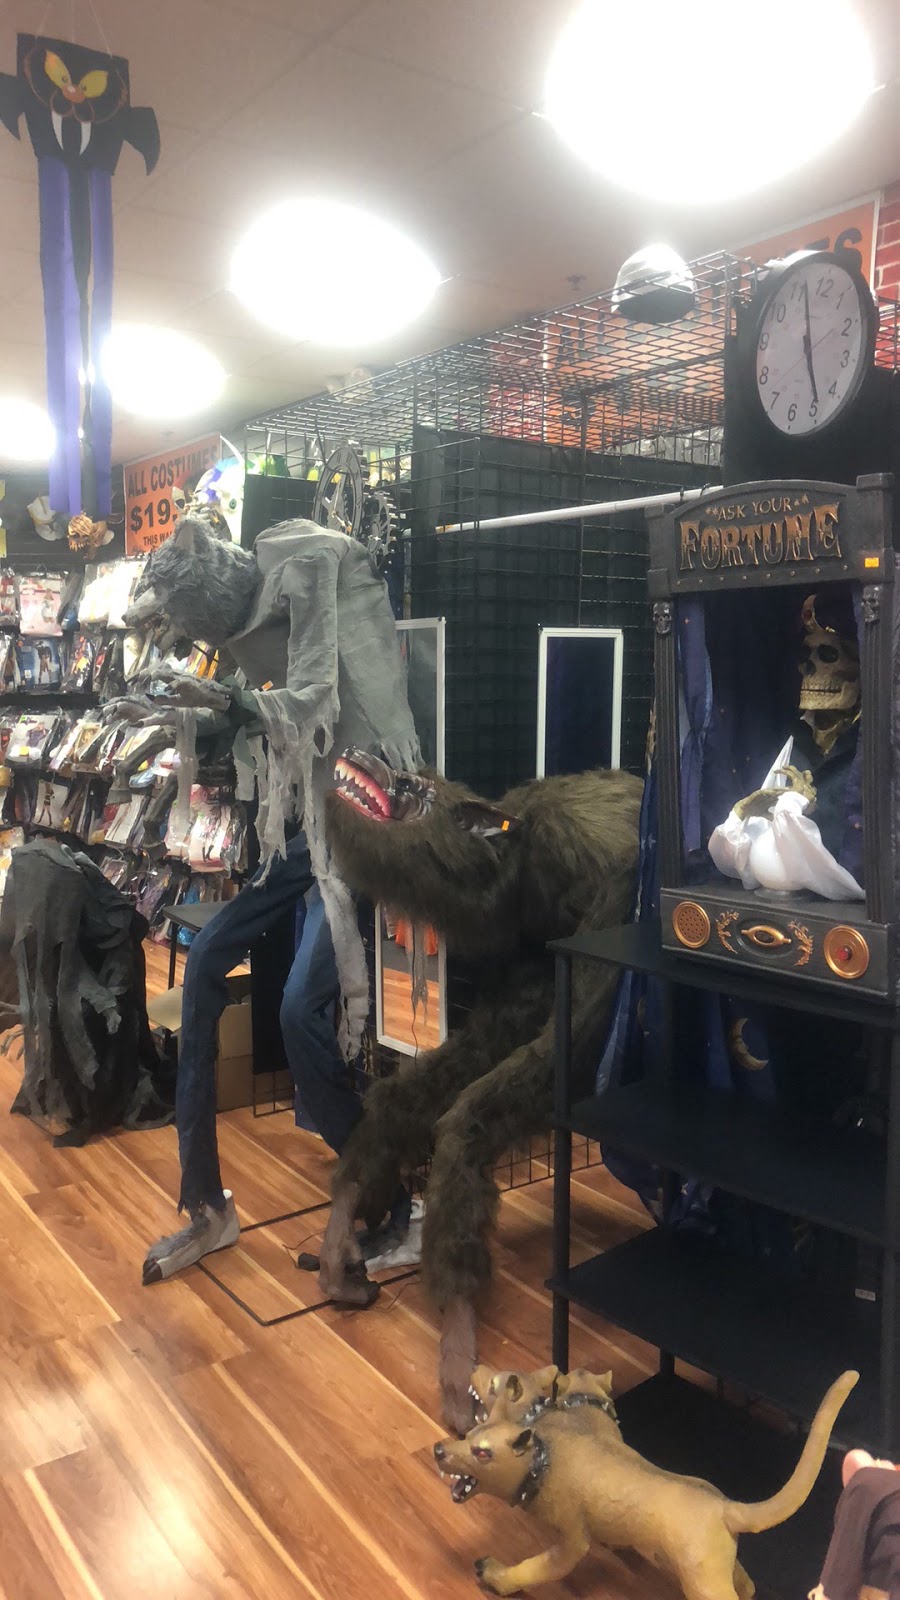 Halloween Wholesalers | 774 Shoppes Blvd, North Brunswick Township, NJ 08902, USA | Phone: (732) 305-6022